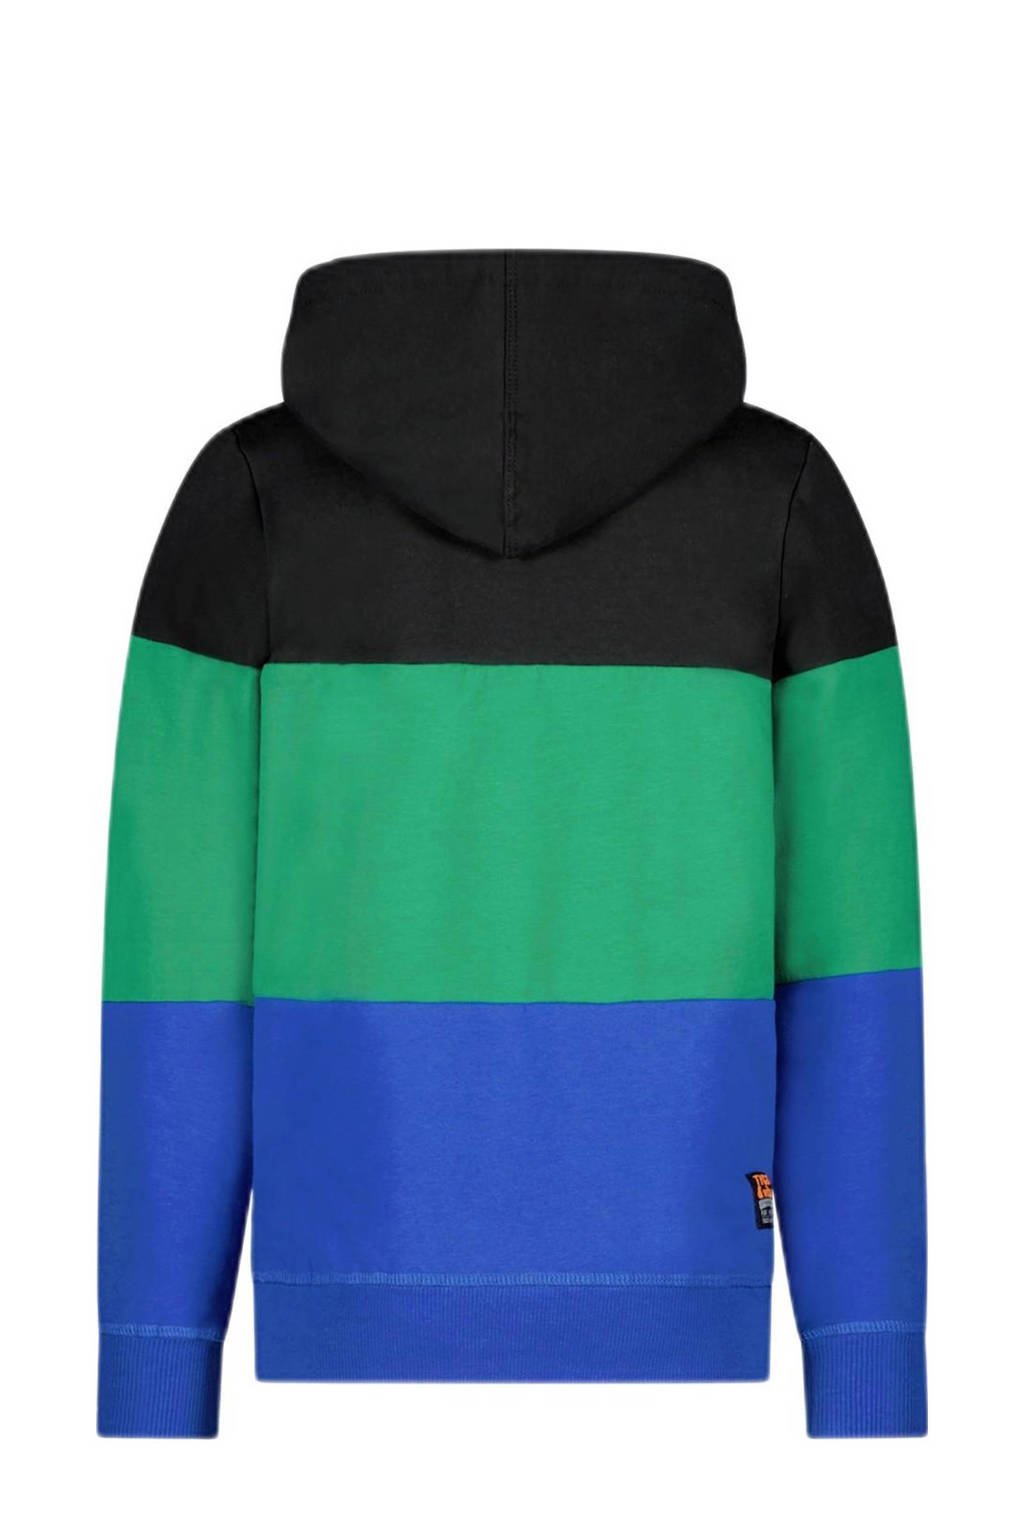 hoodie Hessel kobaltblauw/zwart/groen